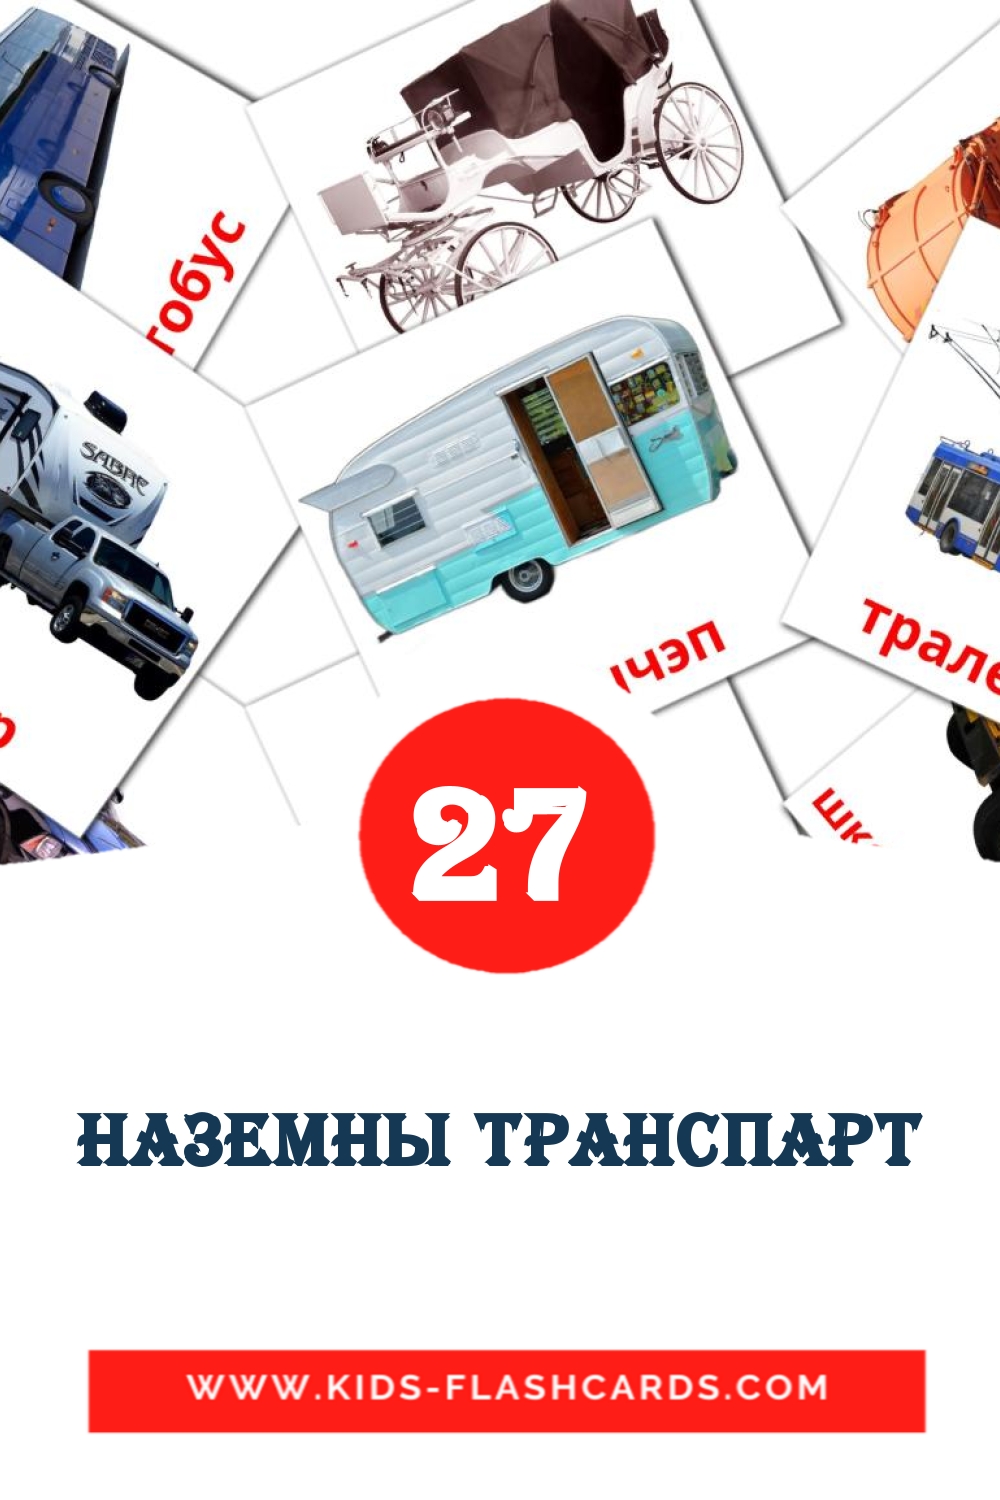 27 carte illustrate di наземны транспарт per la scuola materna in bielorusso